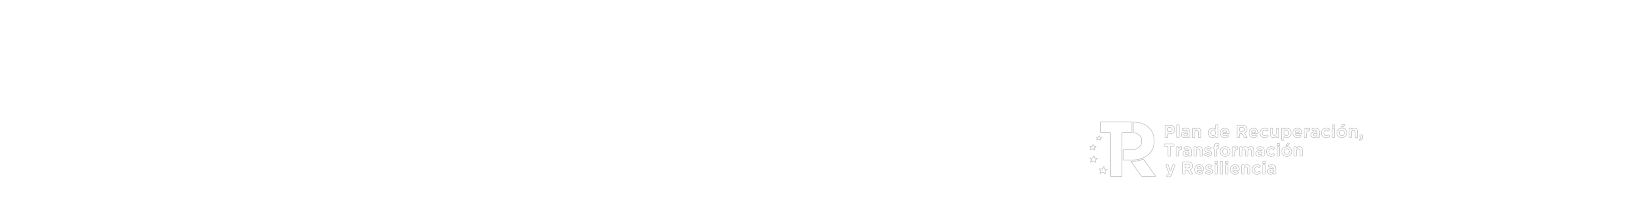 PRTR Financiado por EU logos Kit Digital